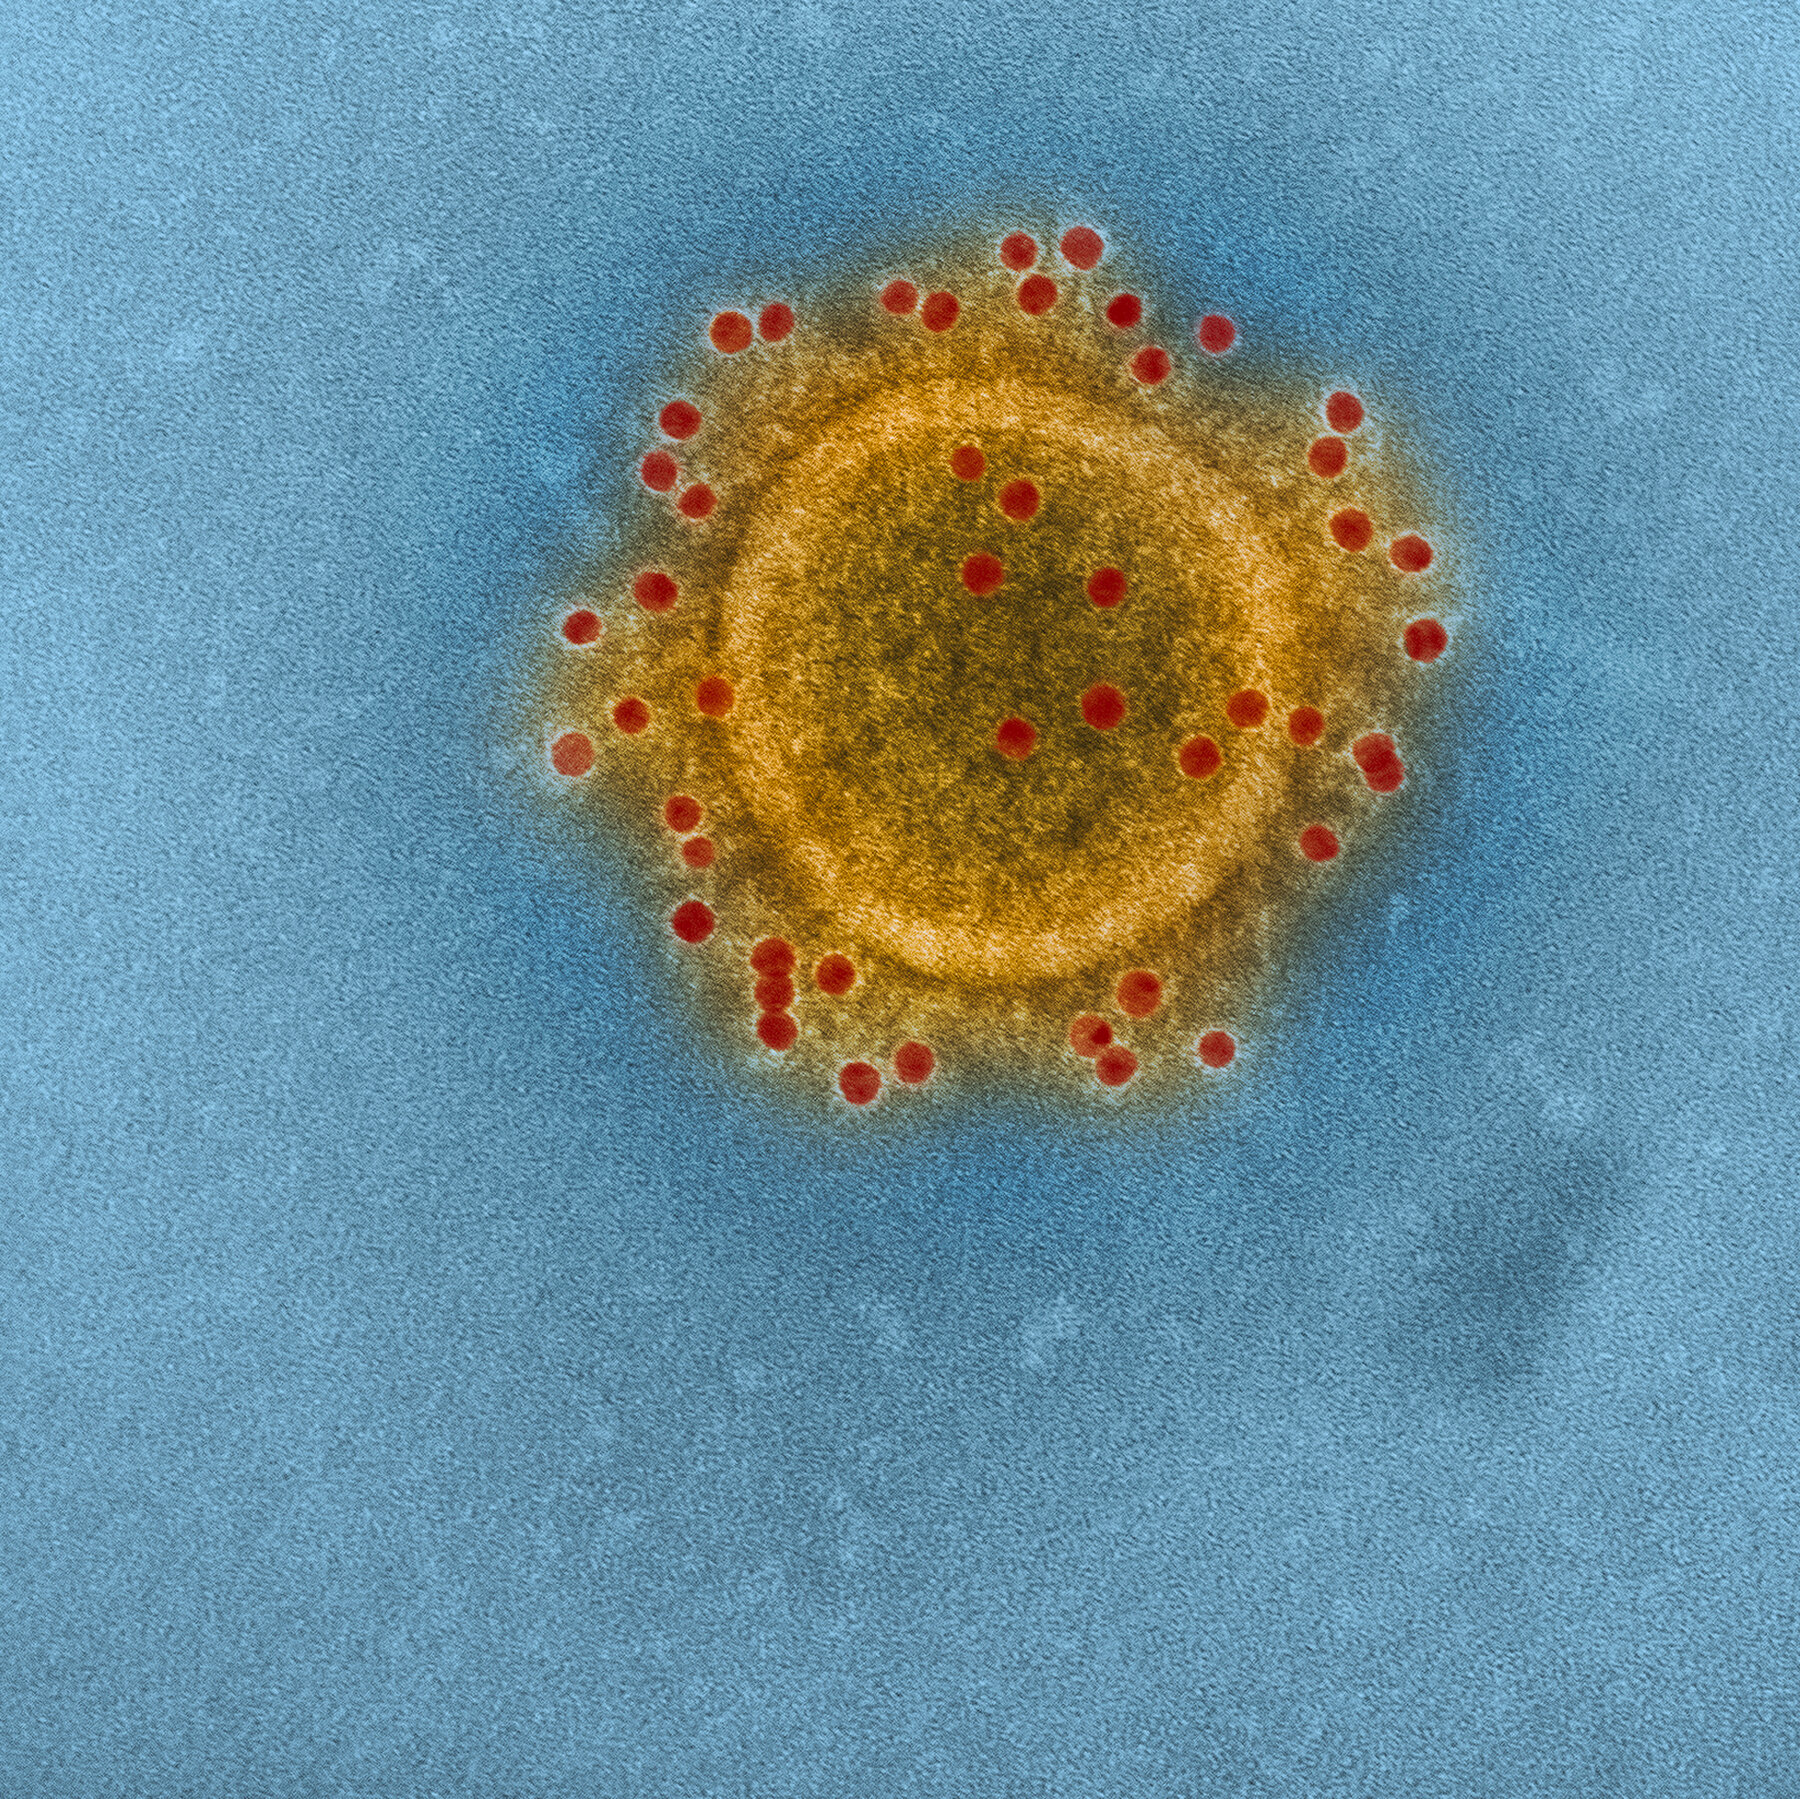 Why efforts to make better, more universal coronavirus vaccines are struggling